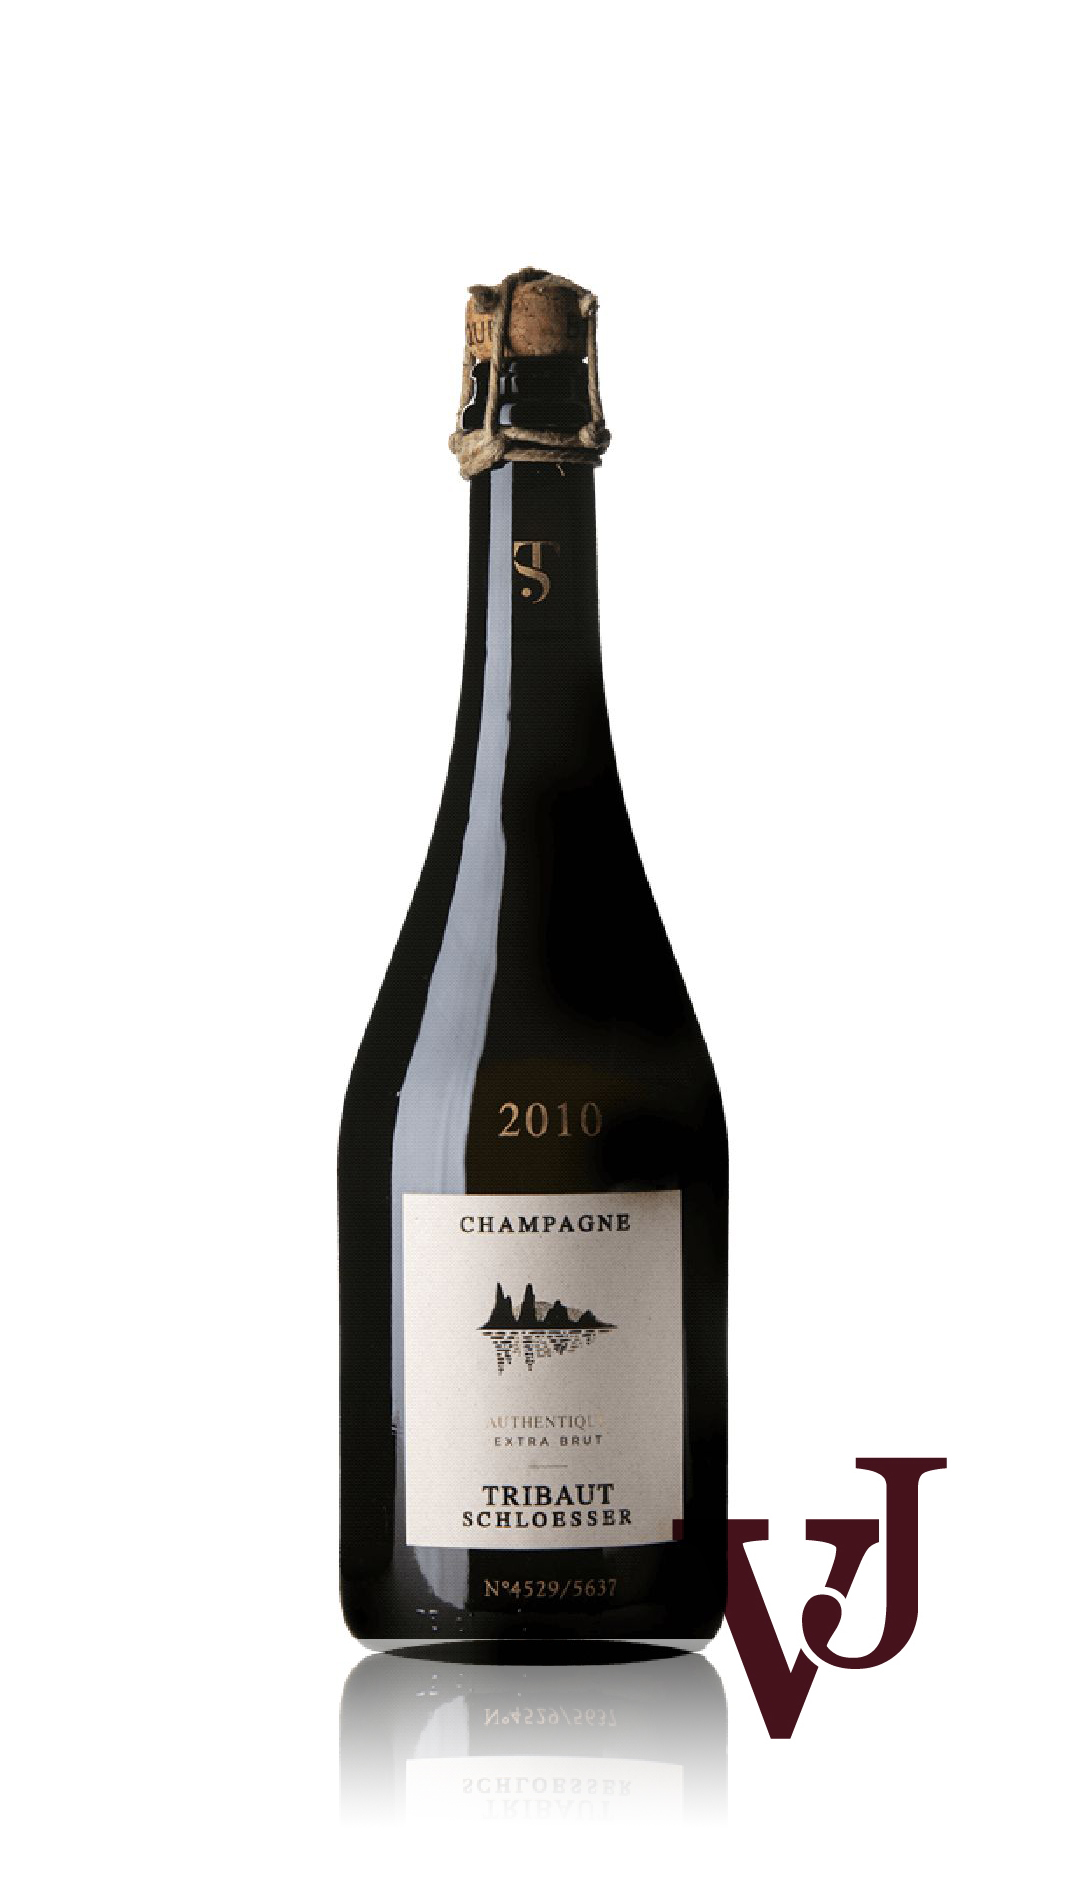 Mousserande Vin - Tribaut Authentique Extra Brut 2010 artikel nummer 9278801 från producenten Champagne Tribaut Schloesser från Frankrike